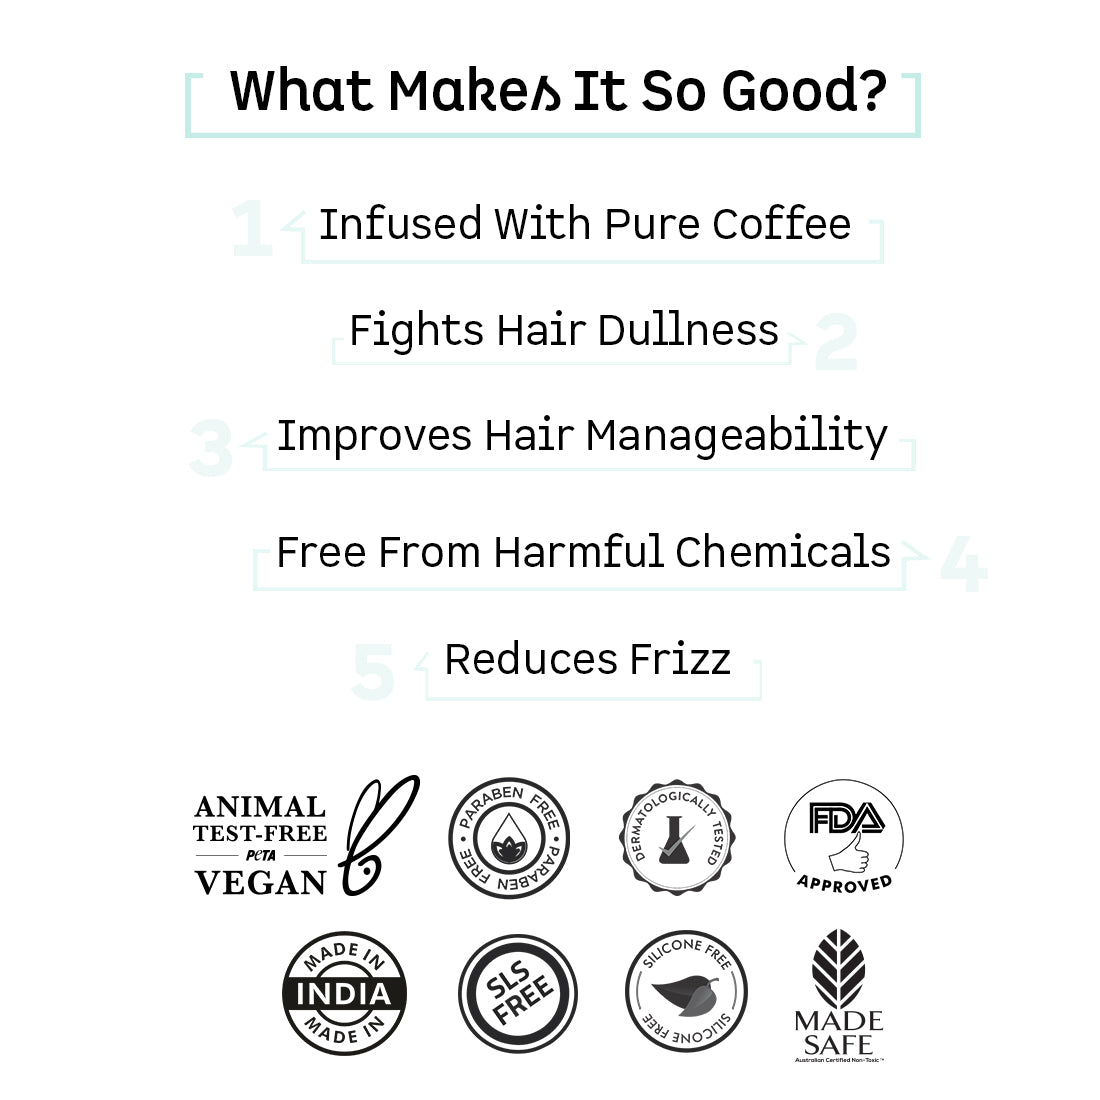 mCaffeine Coffee Hair Serum